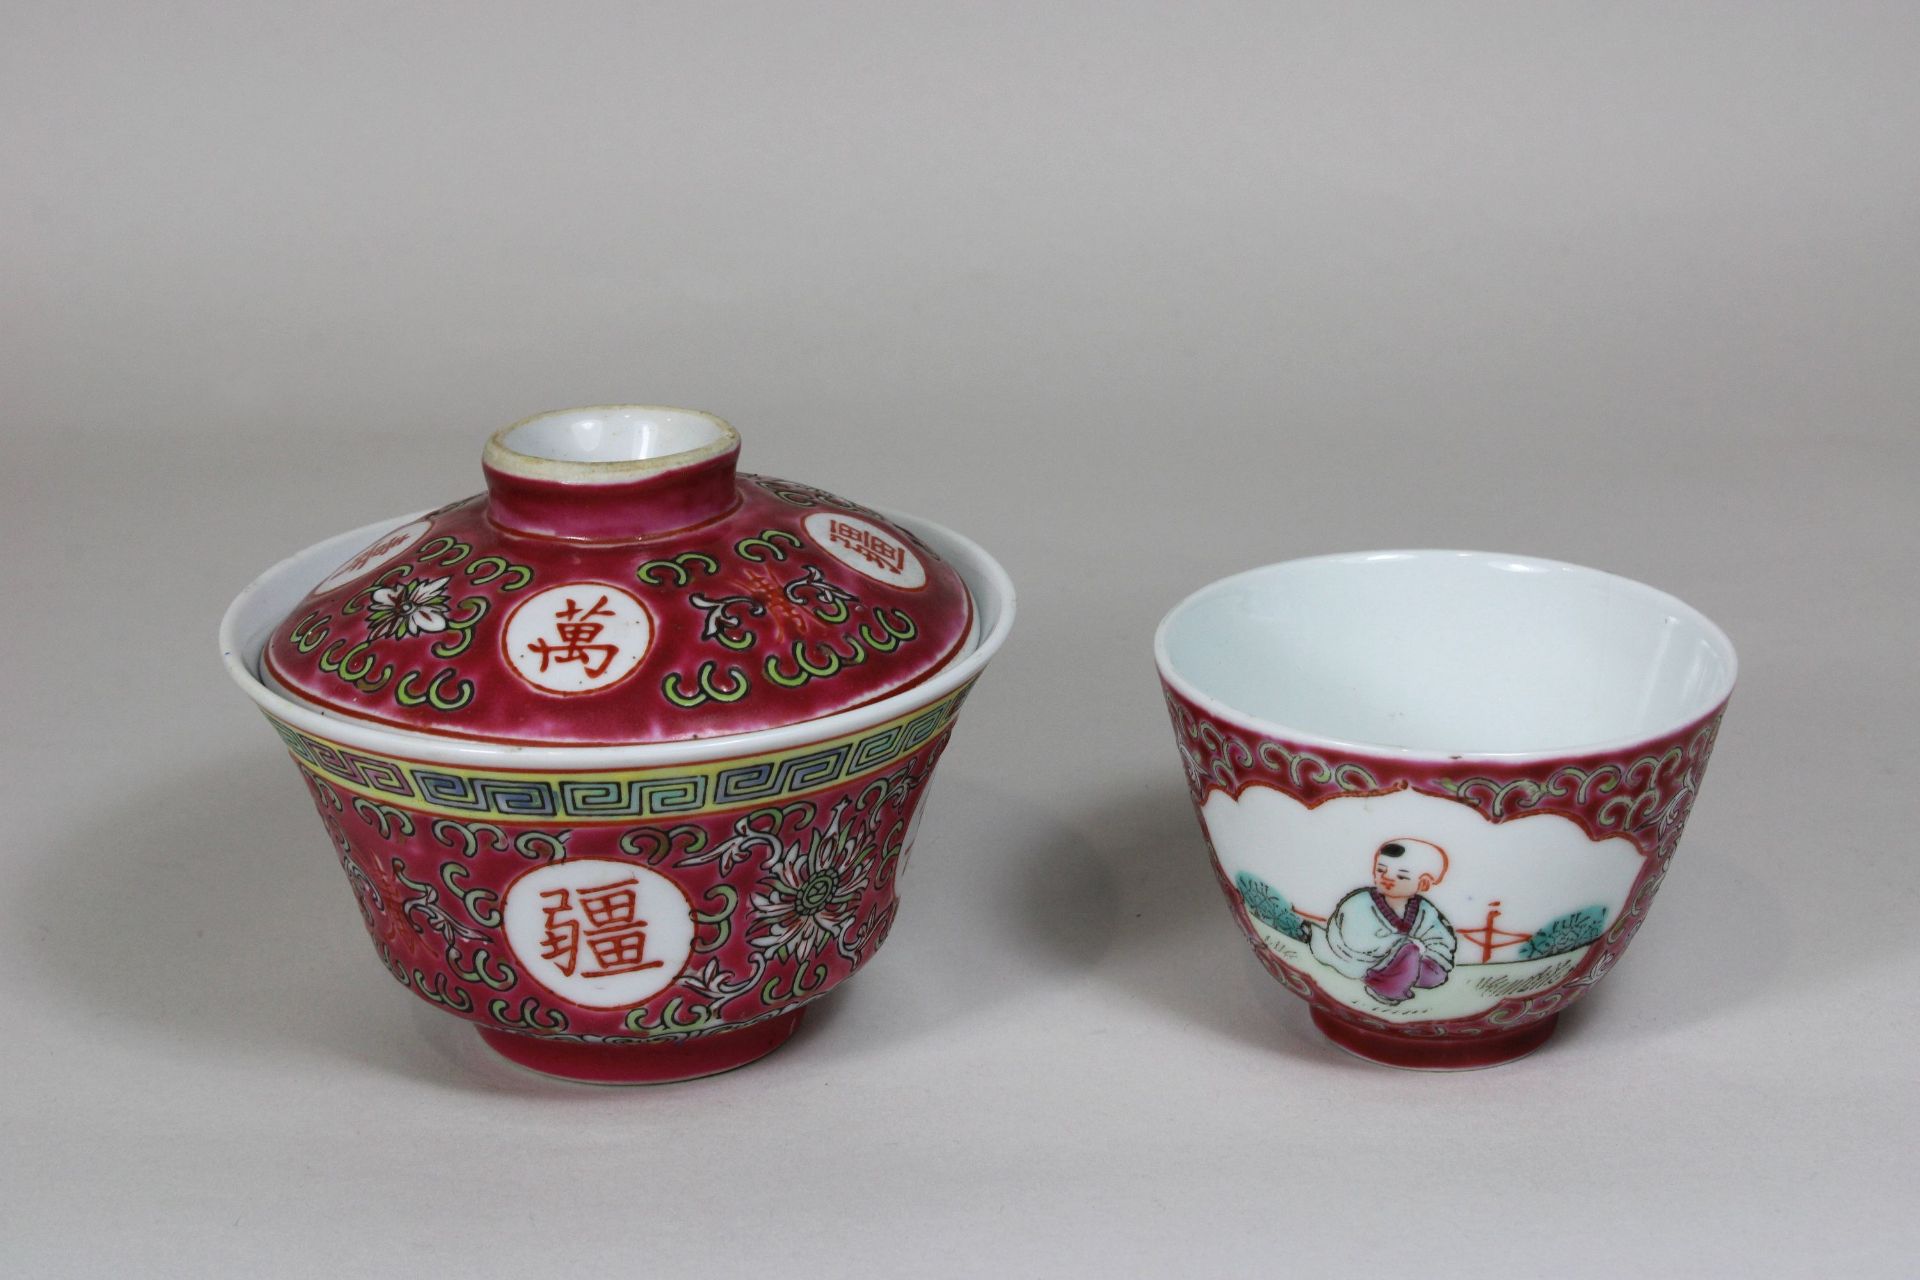 Ricebowl und Teacup, China